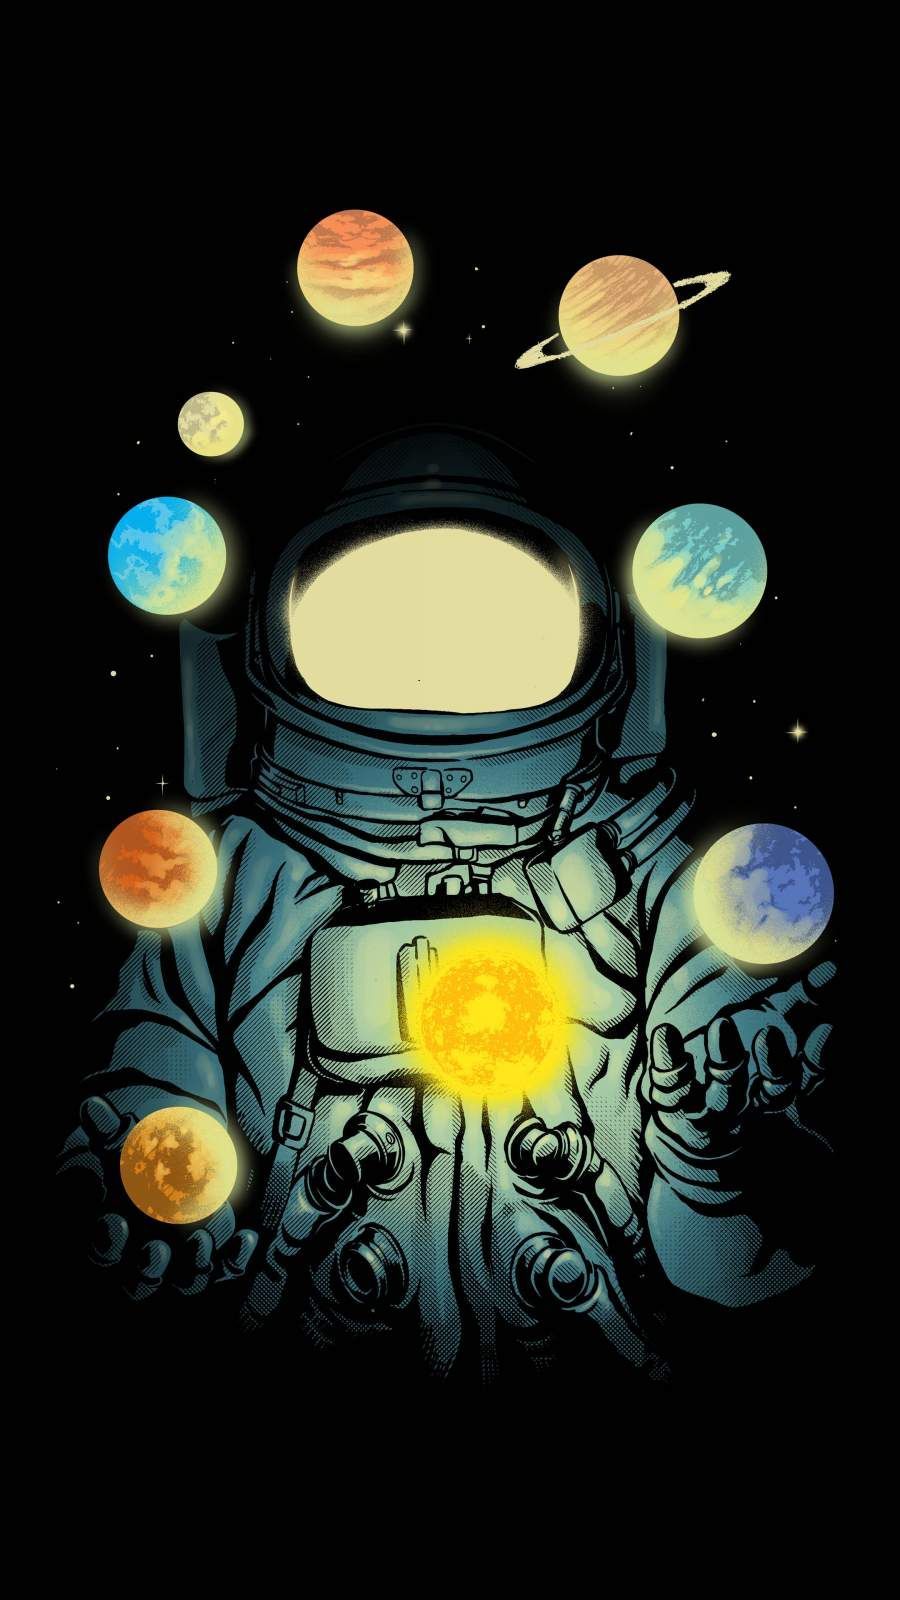 Juggling Astronaut iPhone Wallpaper .com